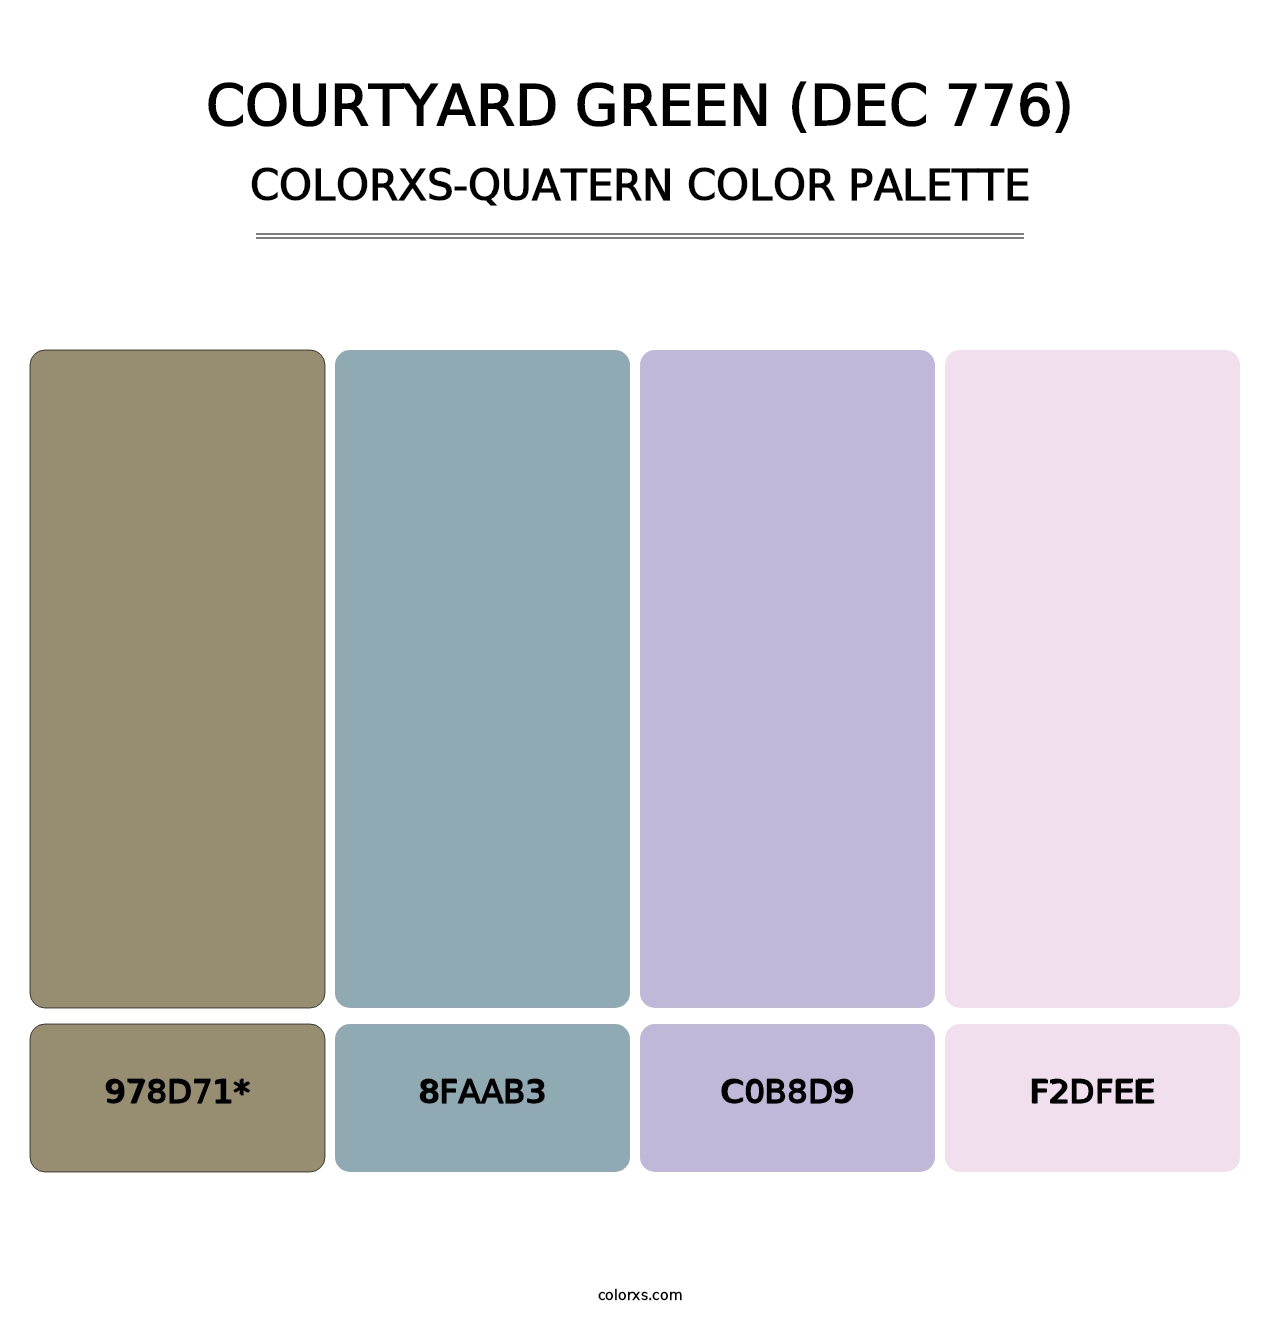 Courtyard Green (DEC 776) - Colorxs Quatern Palette